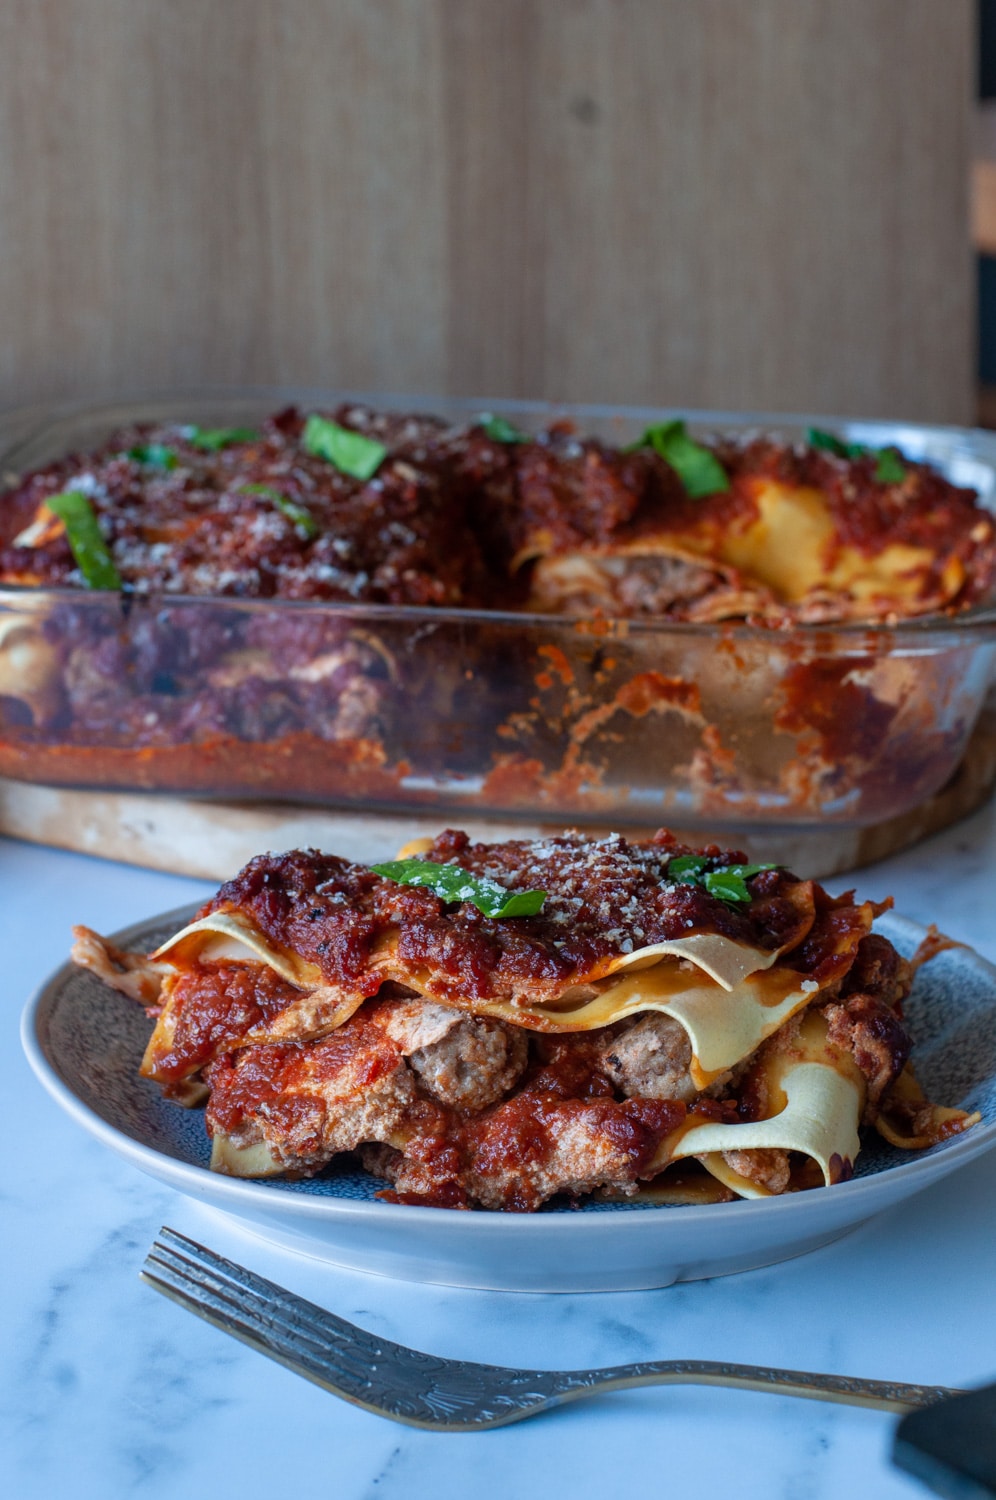  southern Italian lasagna recipe also called lasagna di Carneval